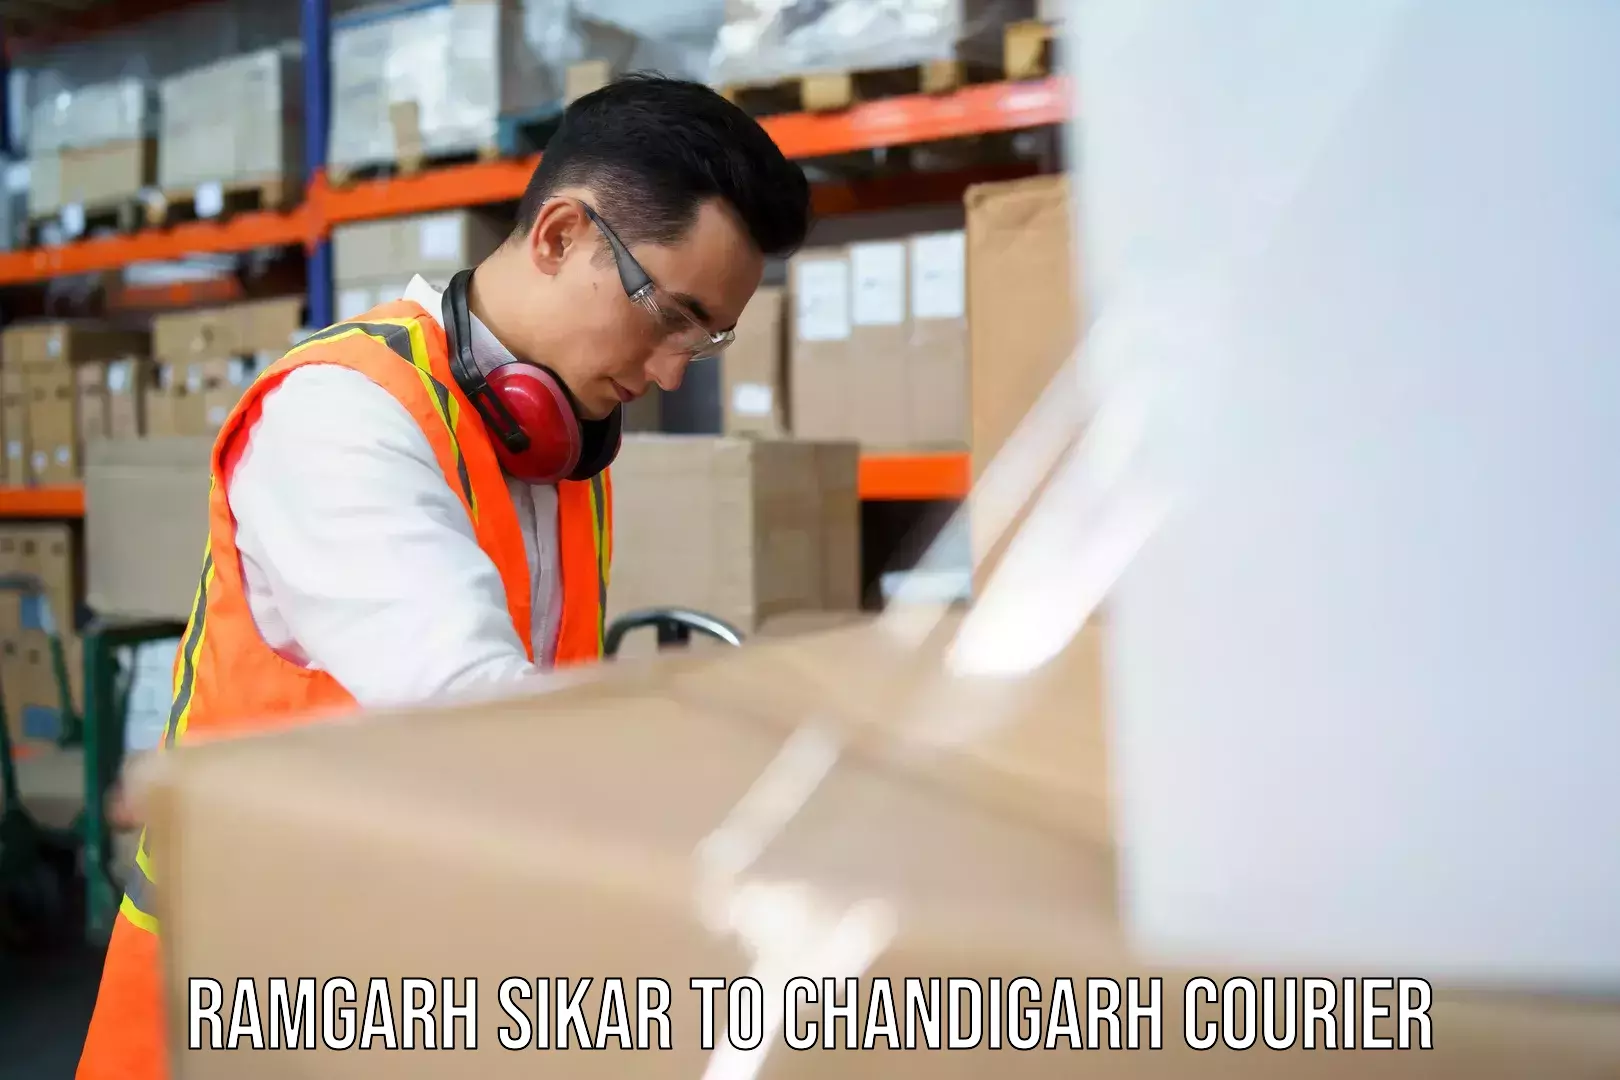 High-speed parcel service Ramgarh Sikar to Chandigarh